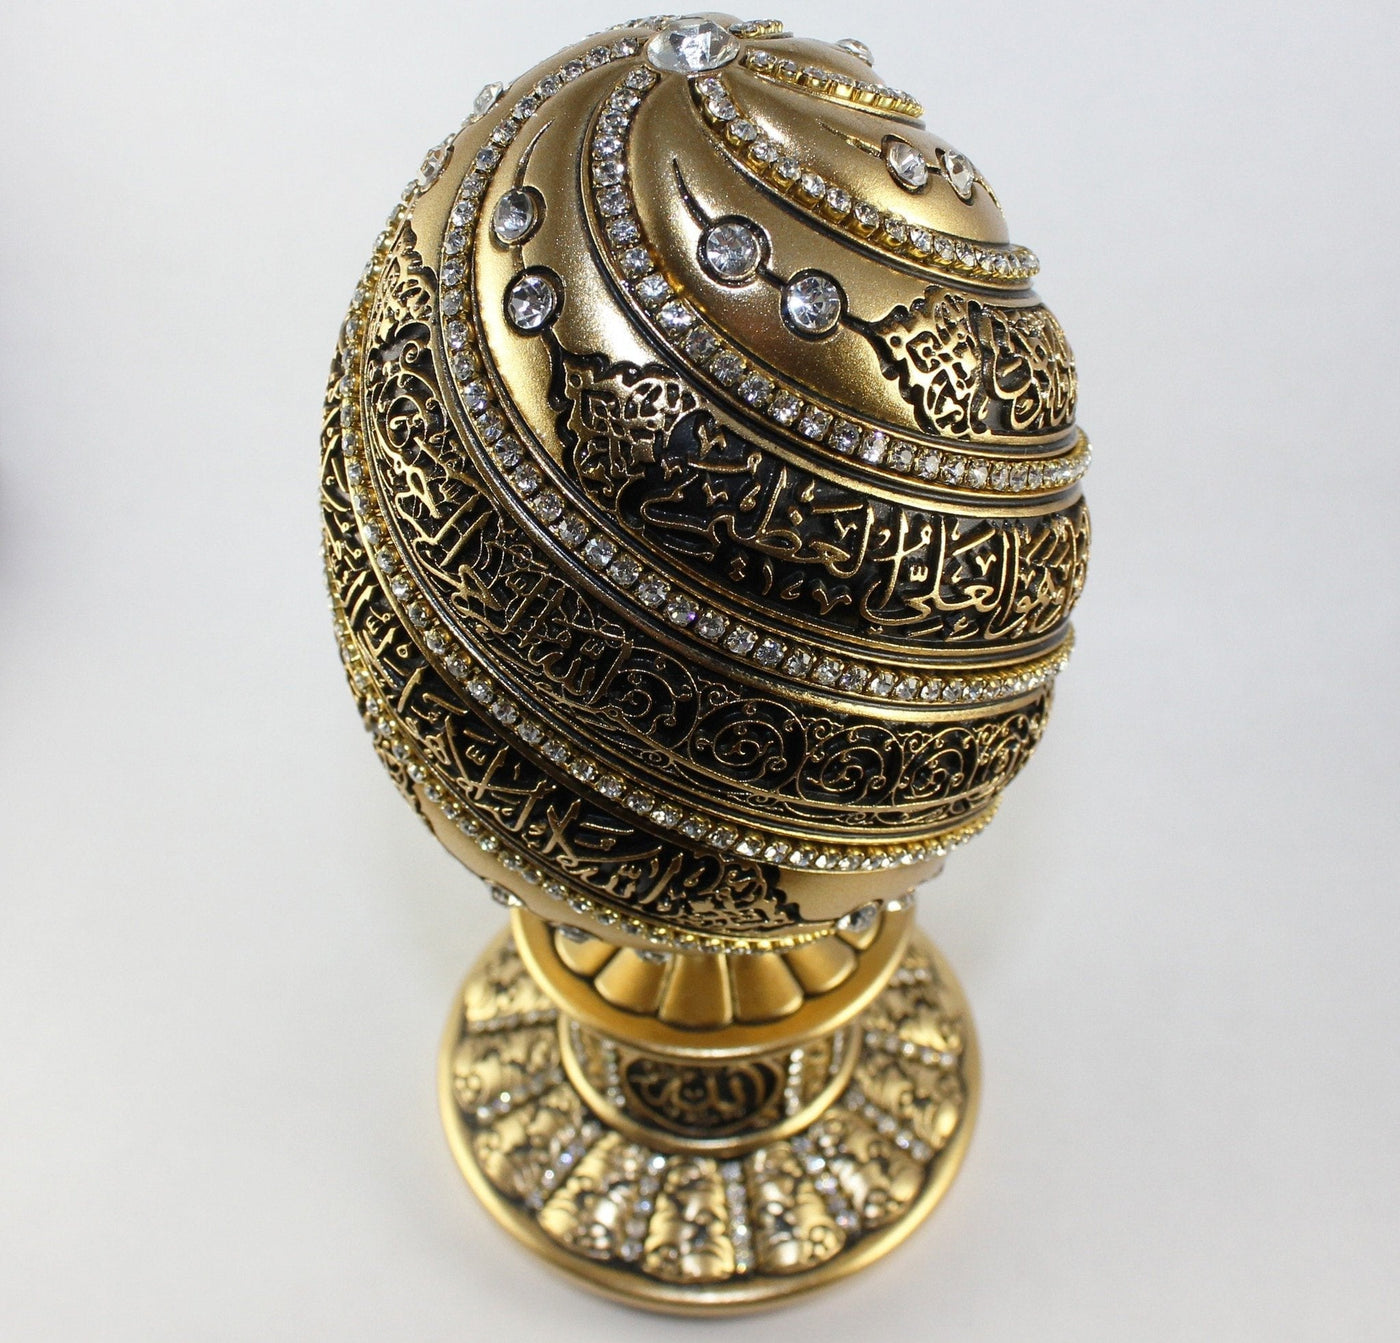 Gunes Islamic Decor Islamic Table Decor Ayatul Kursi Large Egg Gold 1683